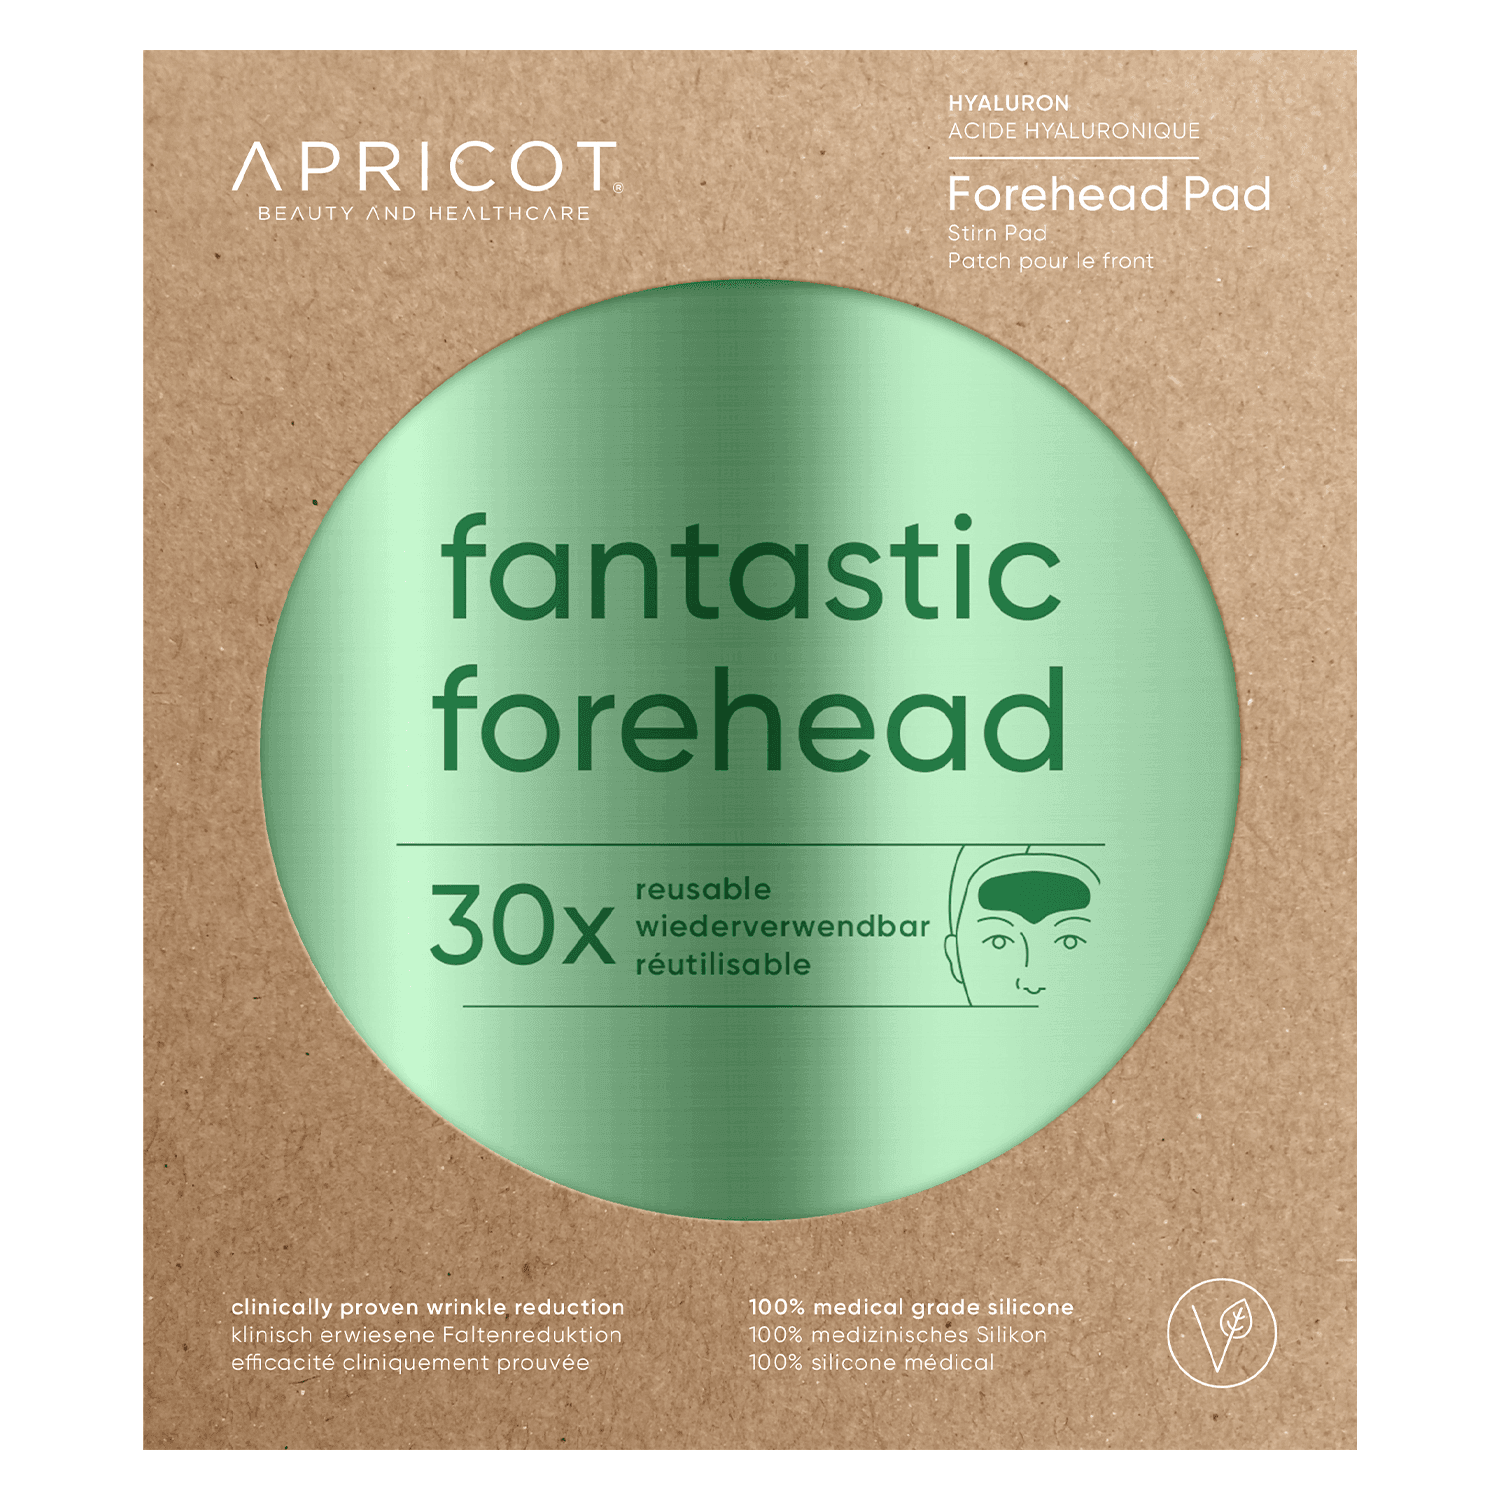 APRICOT - Reusable Forehead Pad Fantastic Forehead